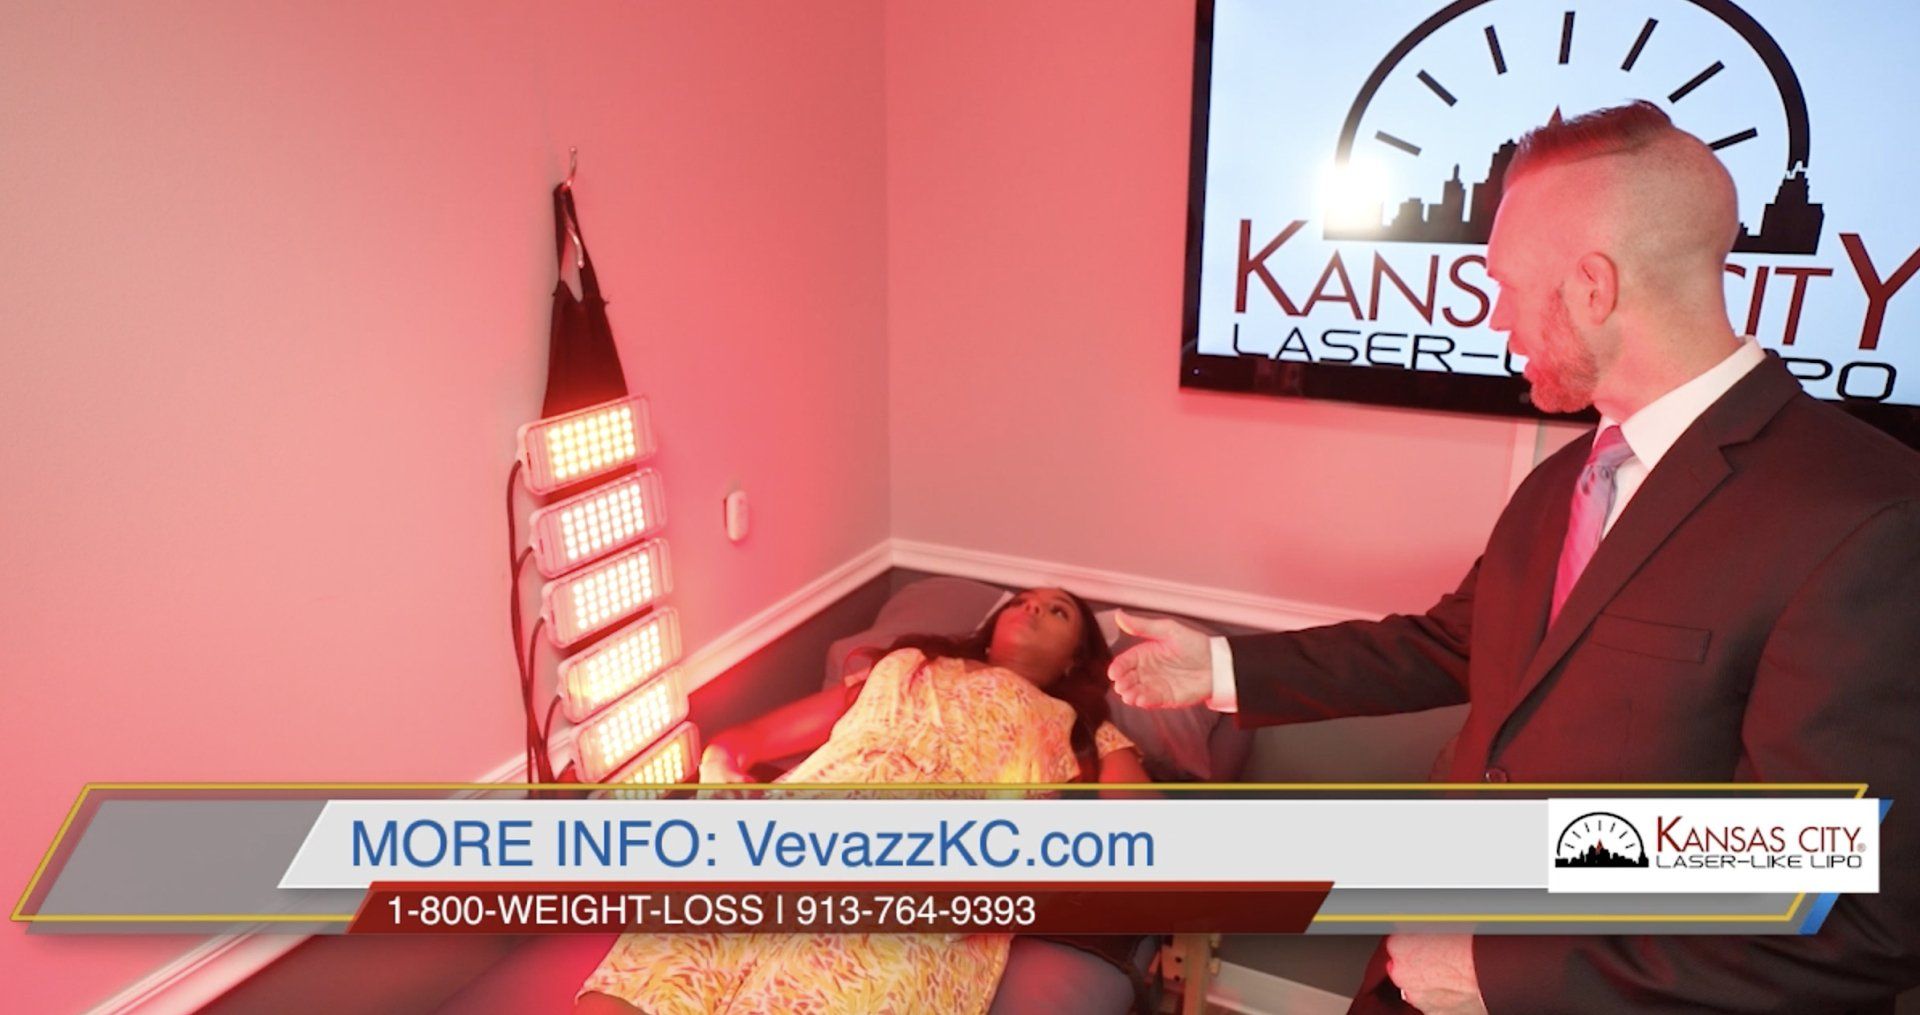 A woman receiving a Vevazz treatment at Kansas City Laser-Like Lipo